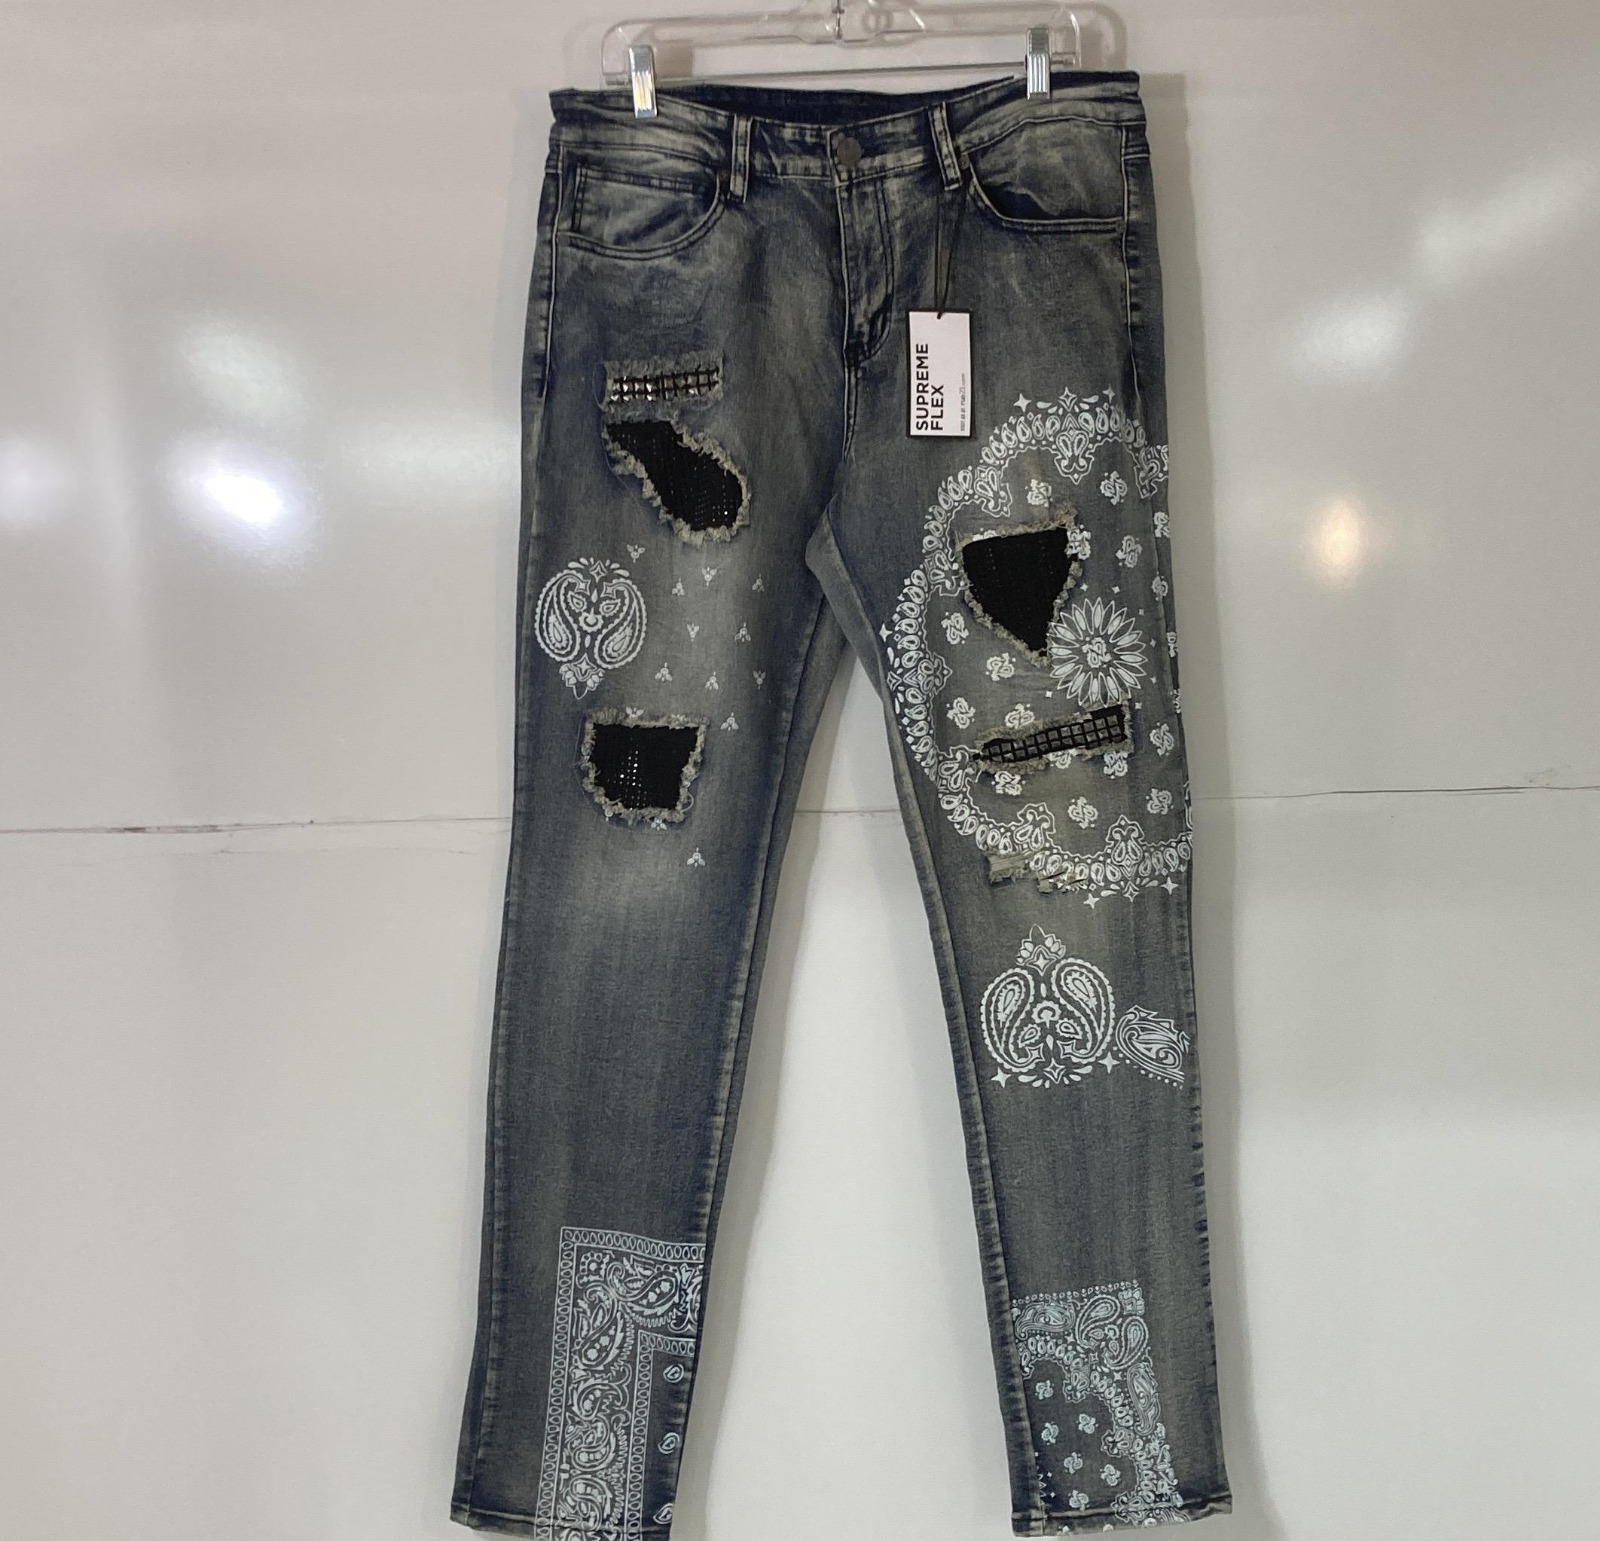 RUE21 Men’s Supreme Flex Skinny Distressed Dark Denim Jeans Pants Size 34x34 NWT